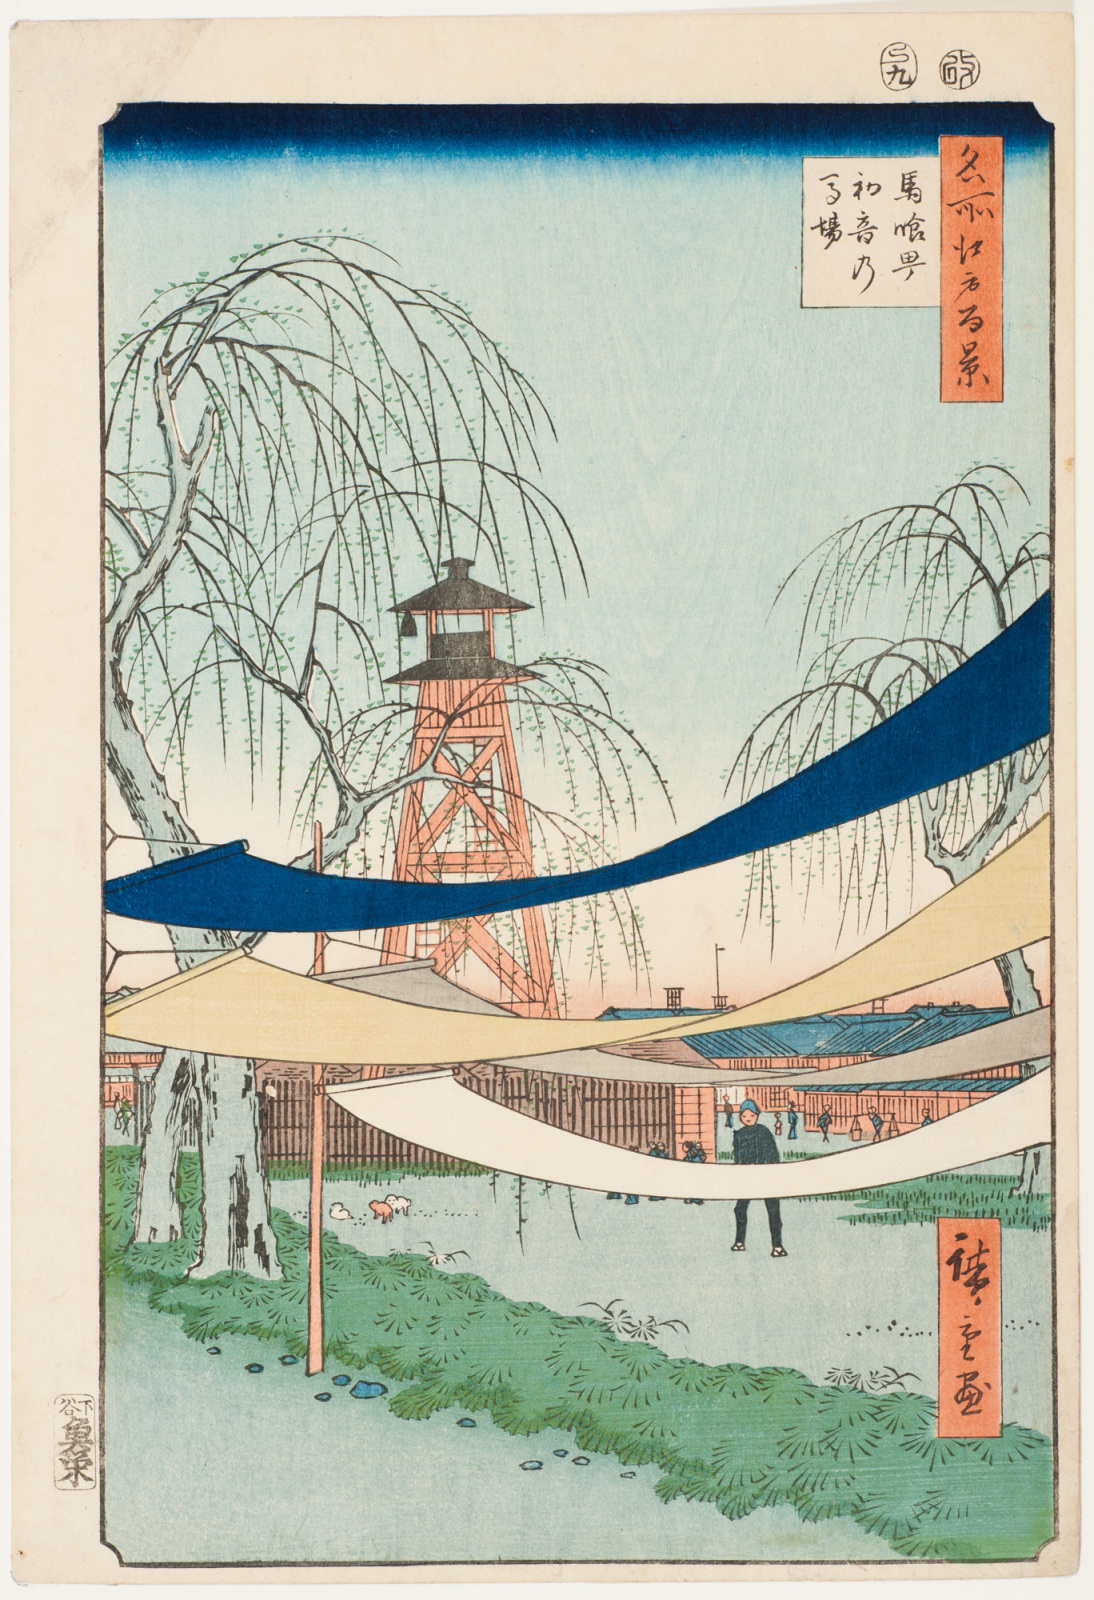 Hatsune-no-baba im Bakuro-chō by  Hiroshige - 1856 - 34 x 22,9 cm Cincinnati Art Museum